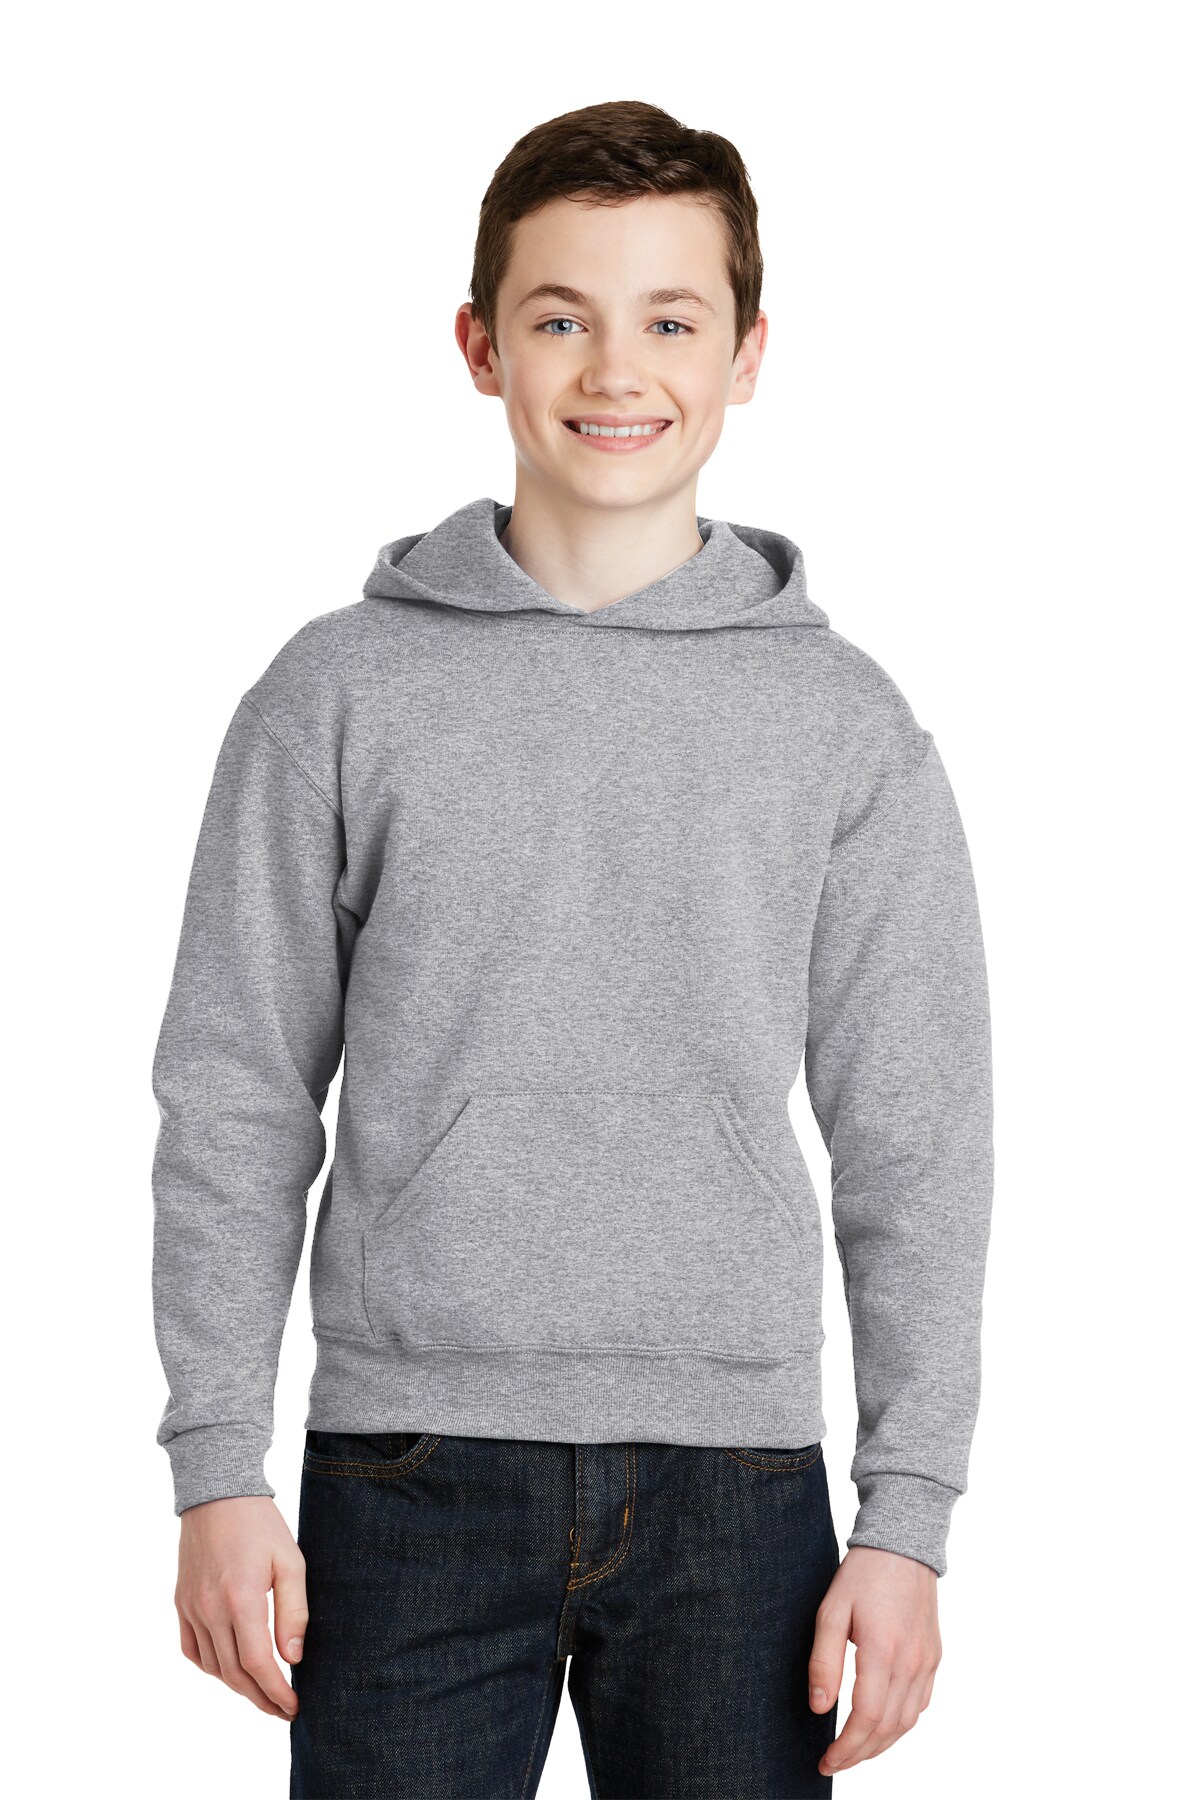 JERZEES® Youth Nublend Pullover Hooded Sweatshirt